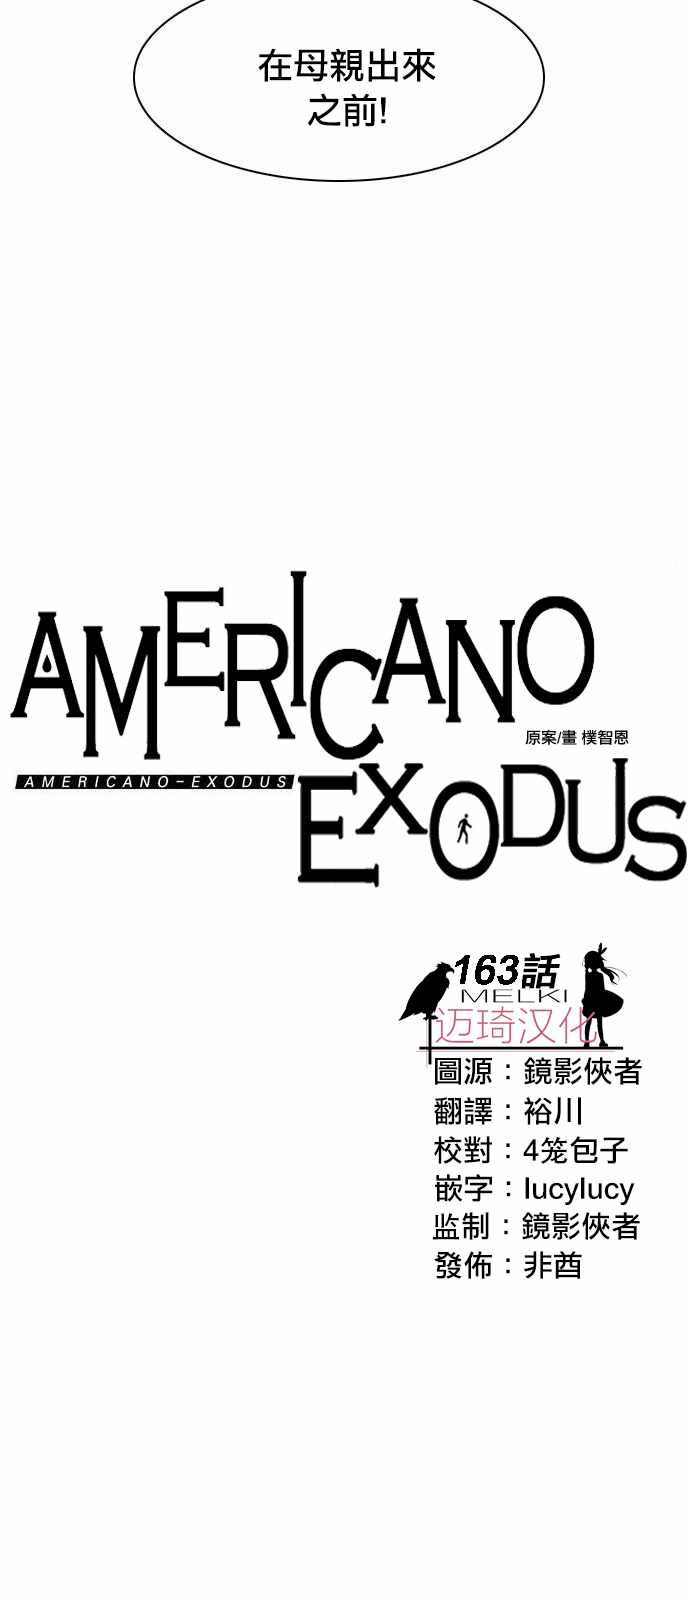 《Americano-exodus》漫画 exodus 163集